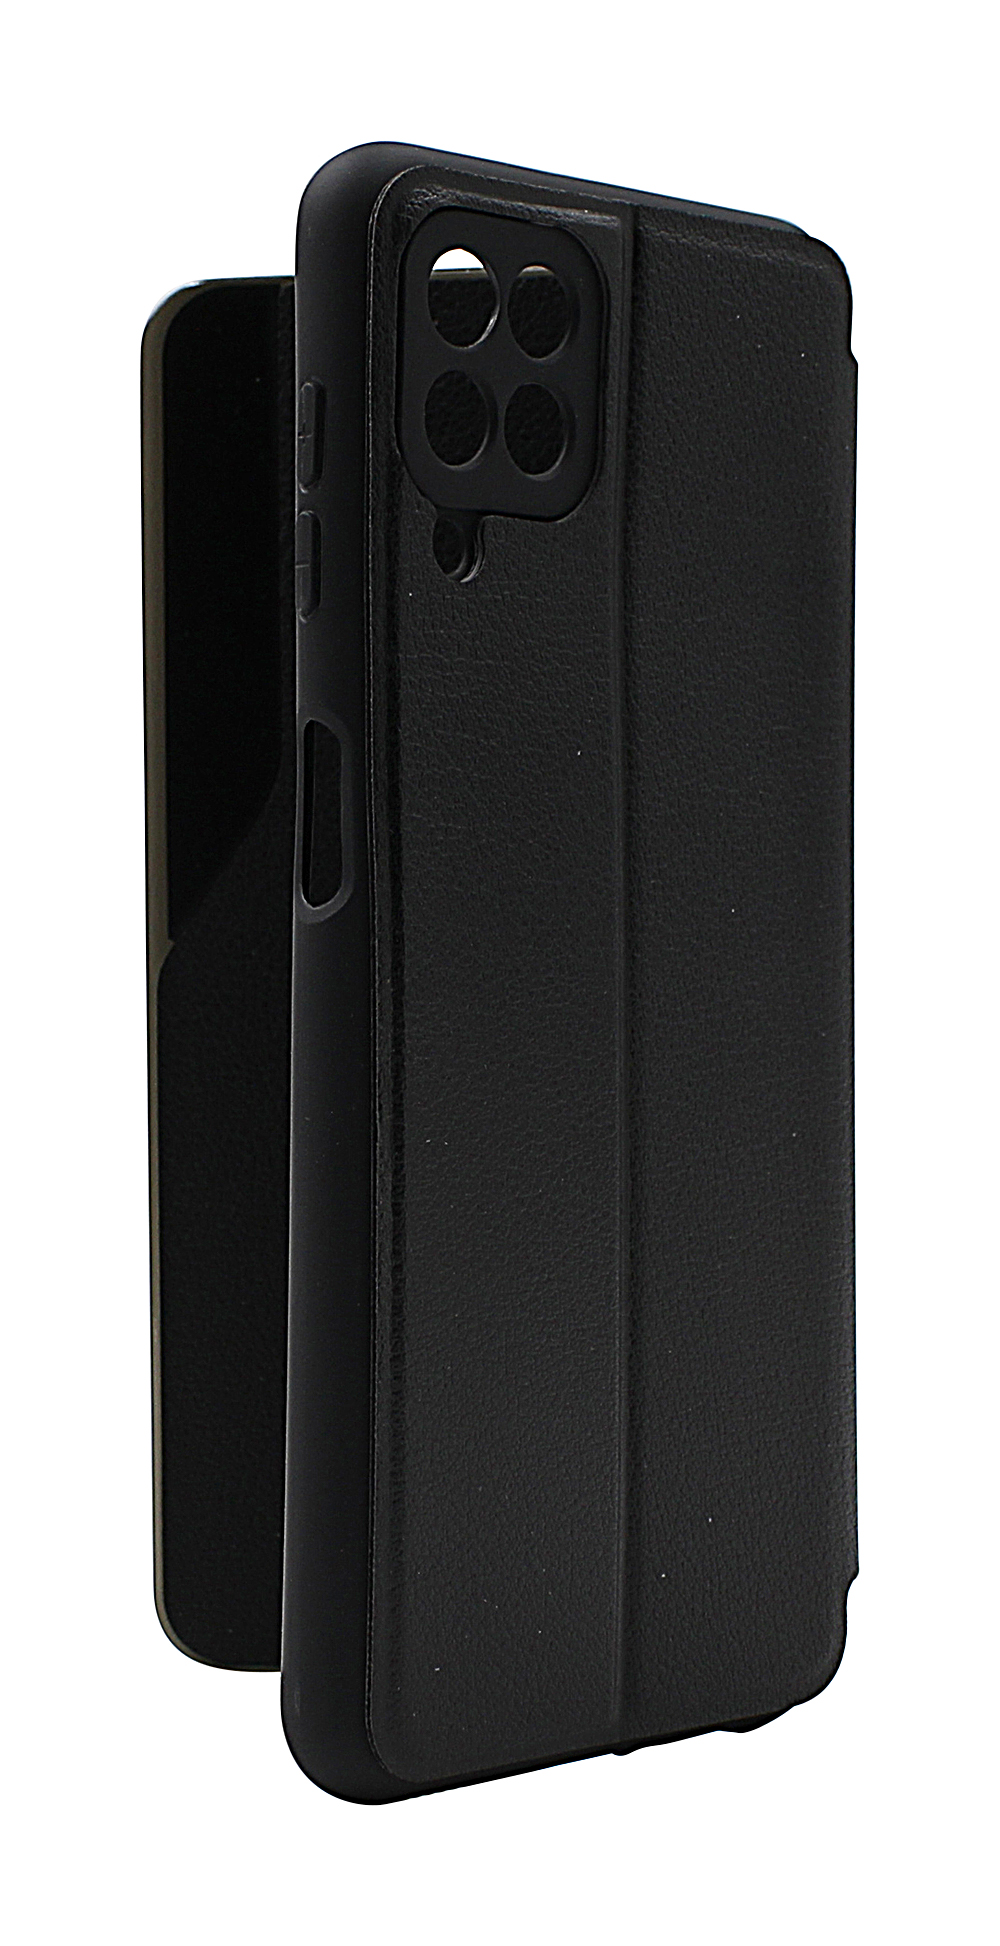 Smart Flip Cover Samsung Galaxy A22 (SM-A225F/DS)